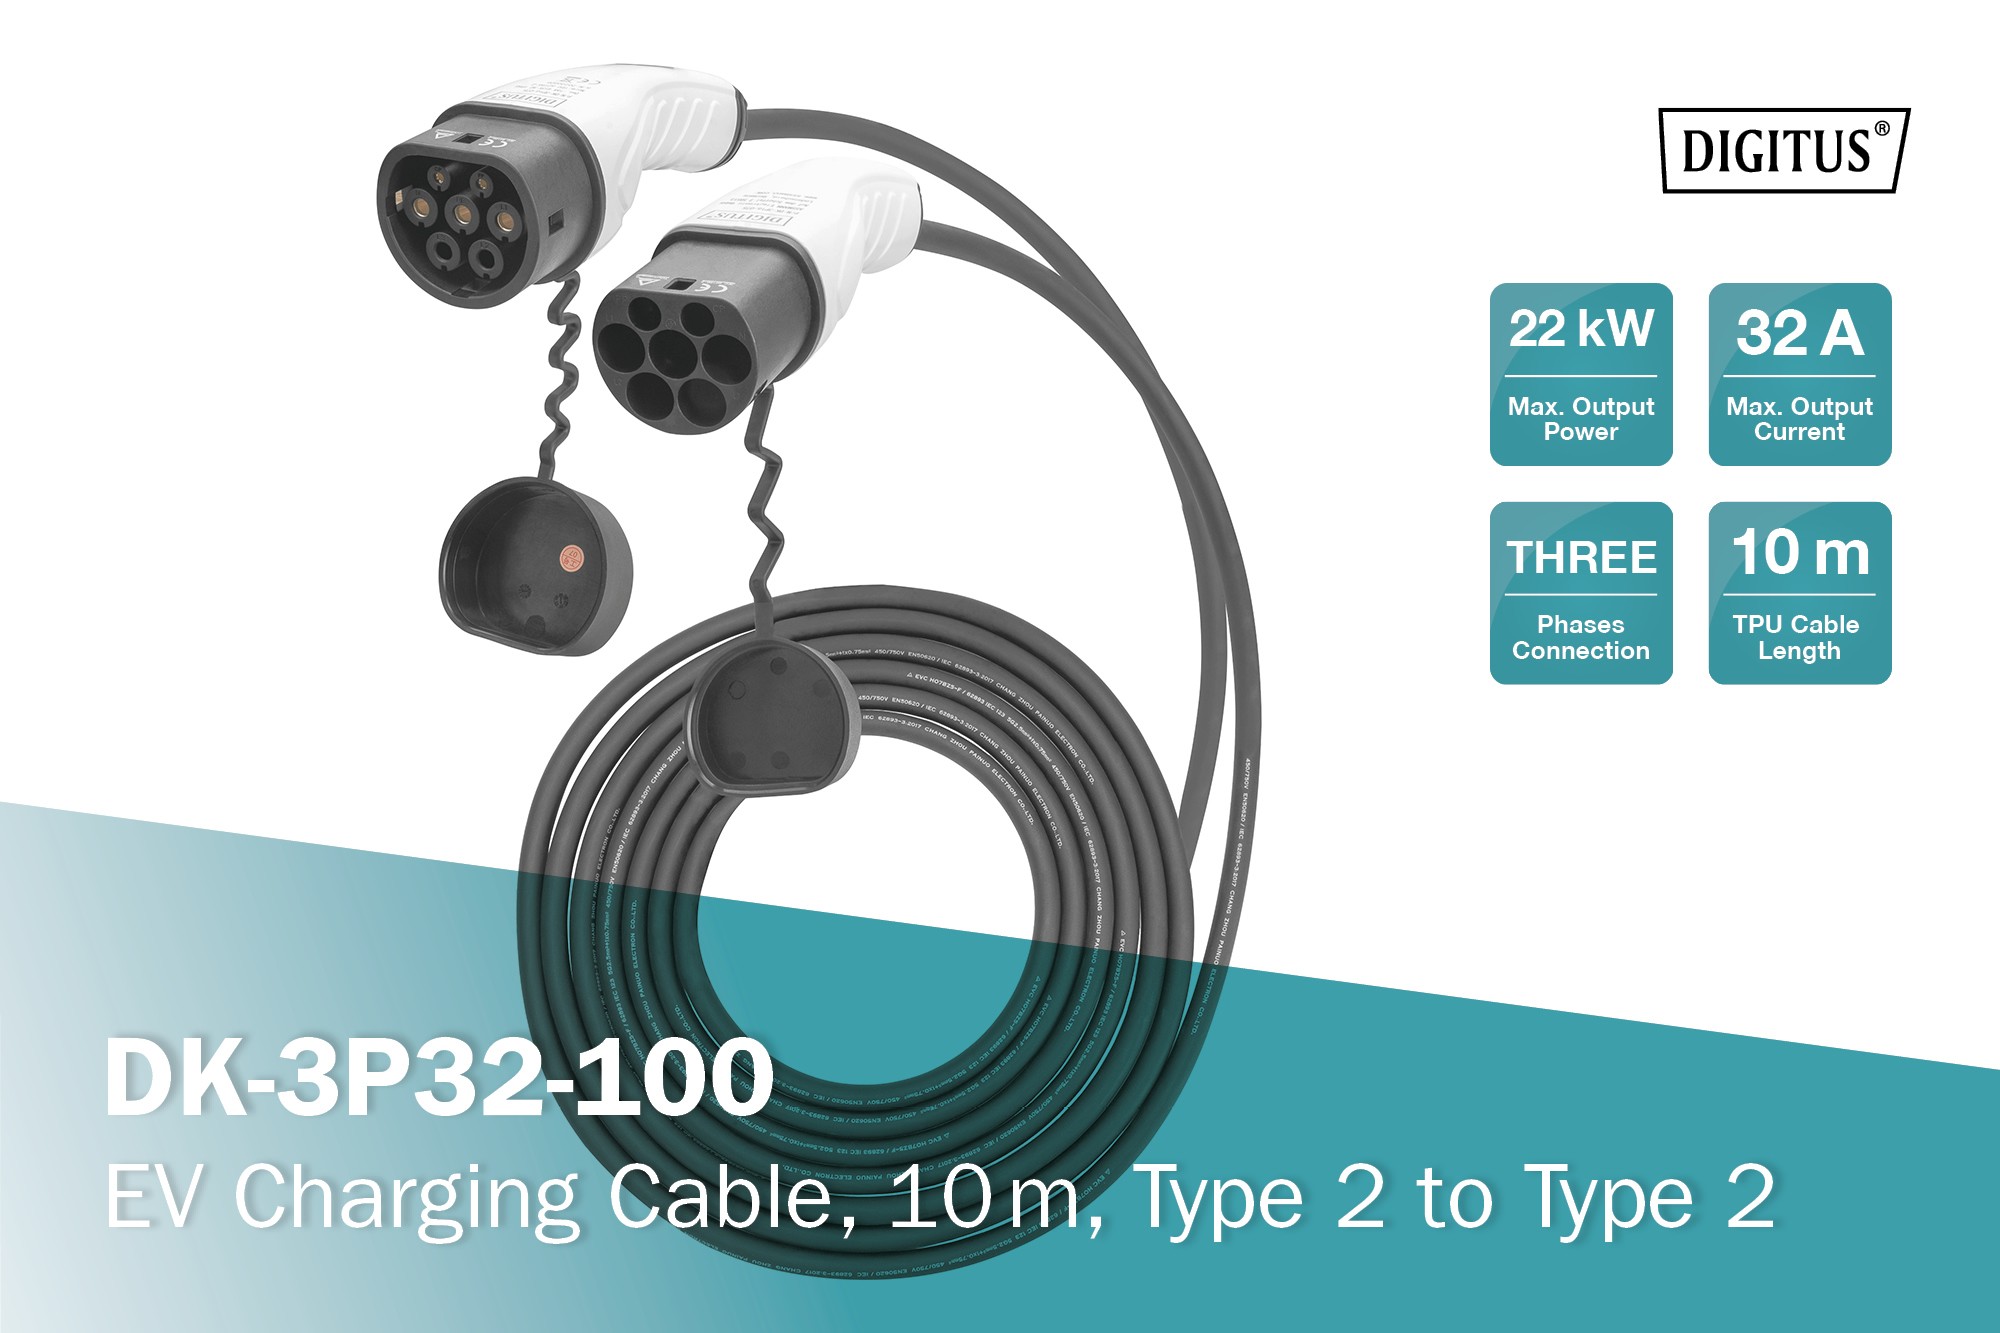 DK-3P32-100  Cable VE carga, Tipo 2 Mennekes 32A trifasica 22kW 10 metros Digitus